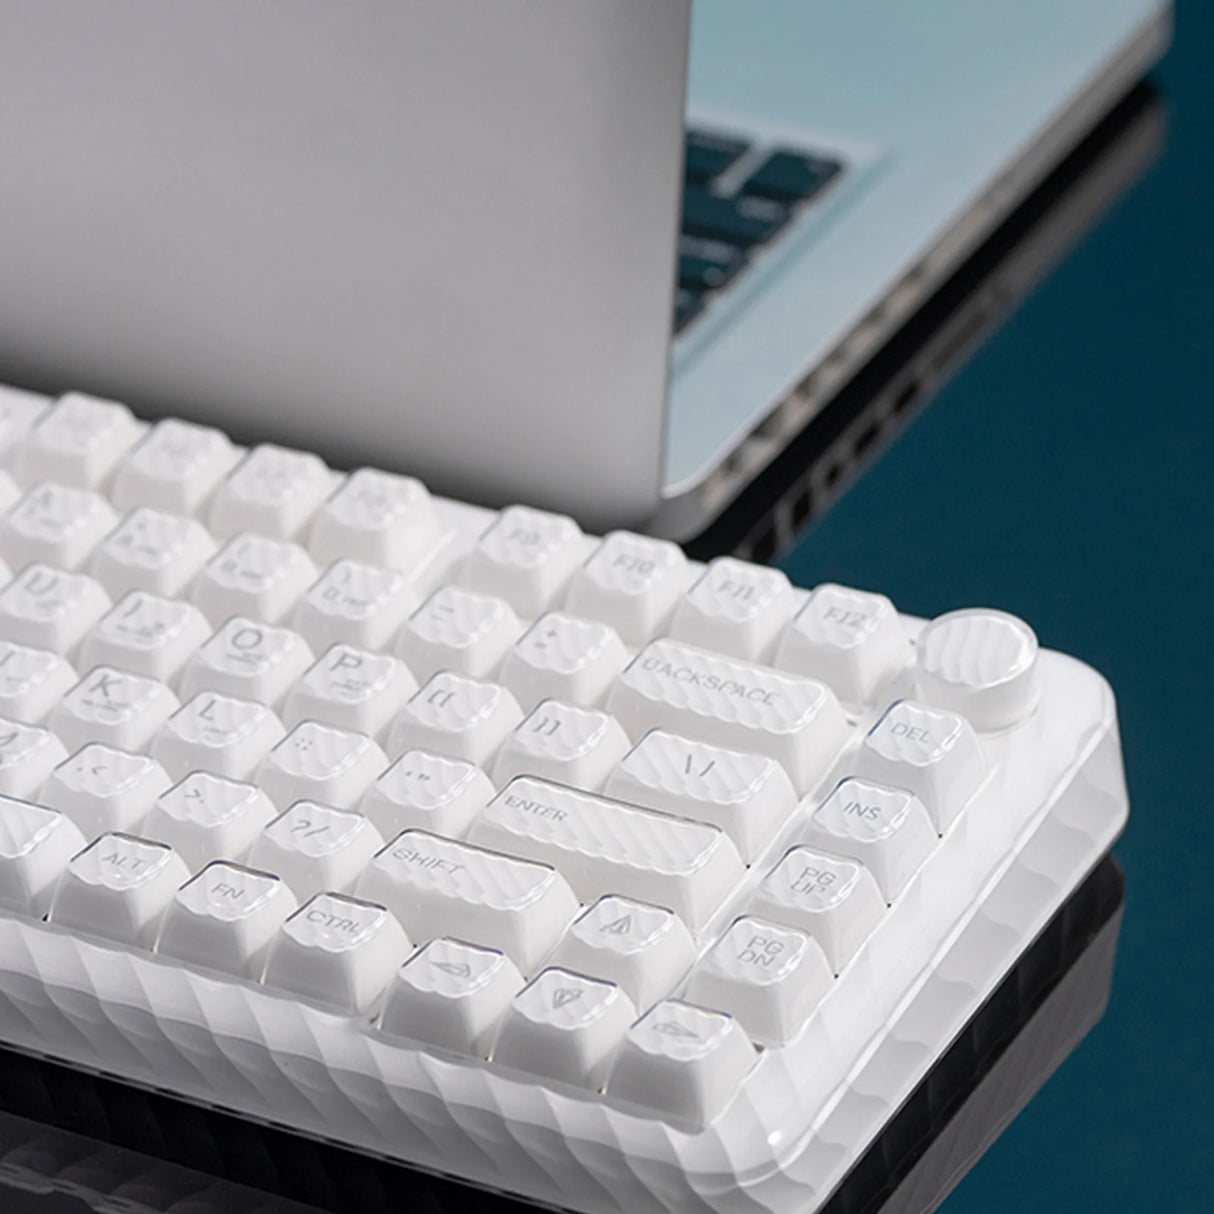 RX S75  Crystal White Tri-mode mechanical keyboard